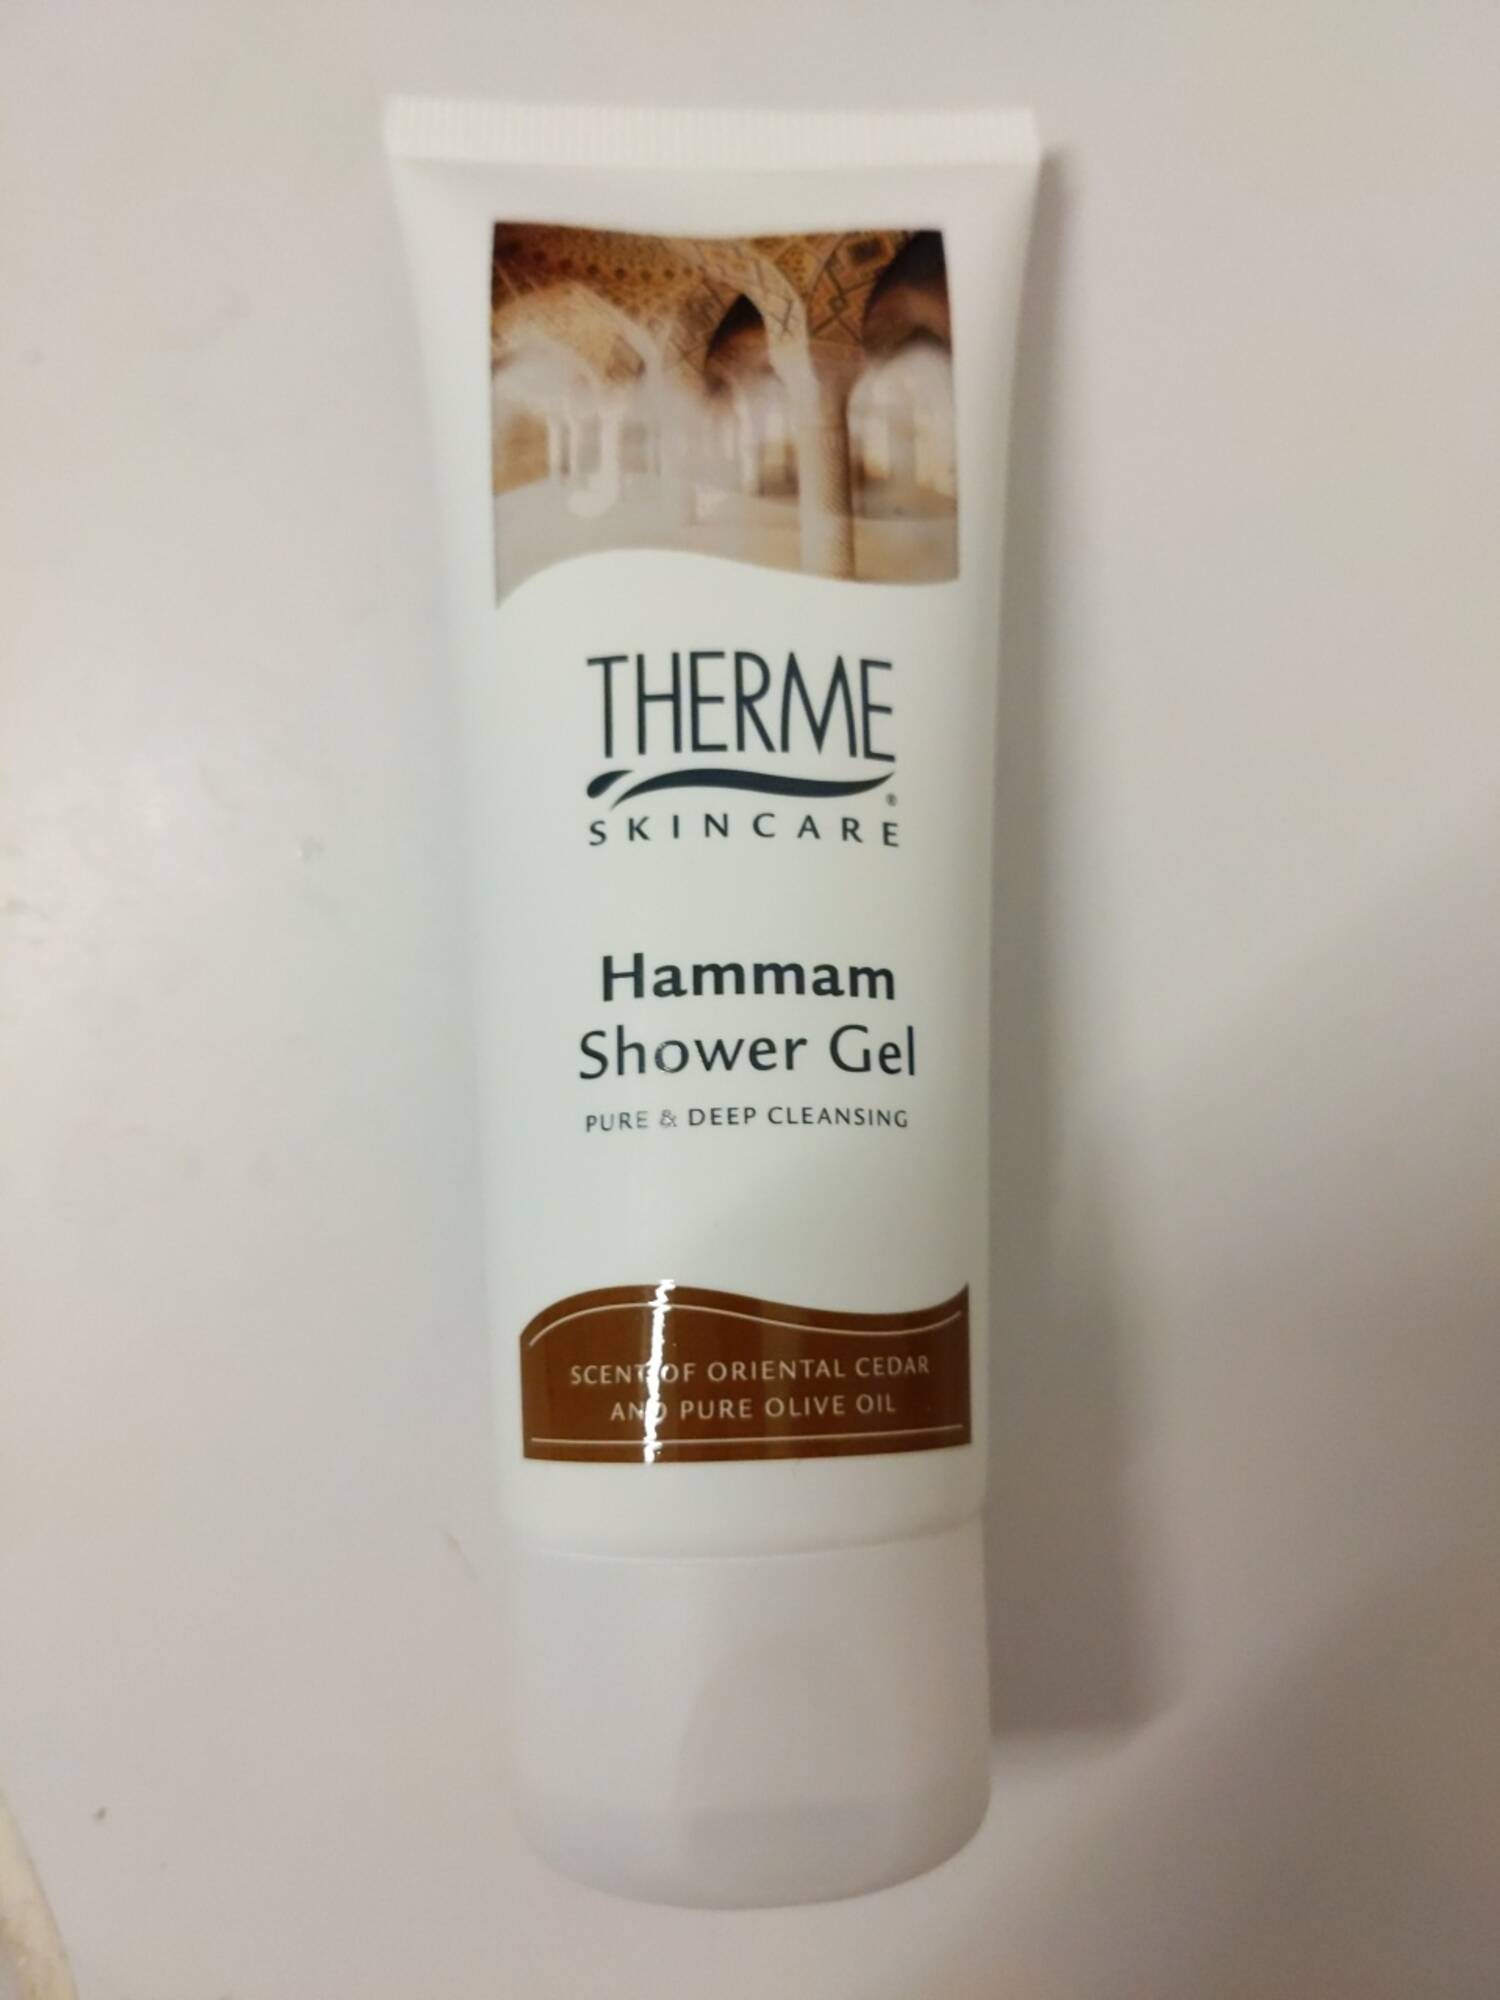 THERME SKINCARE - Hammam shower gel